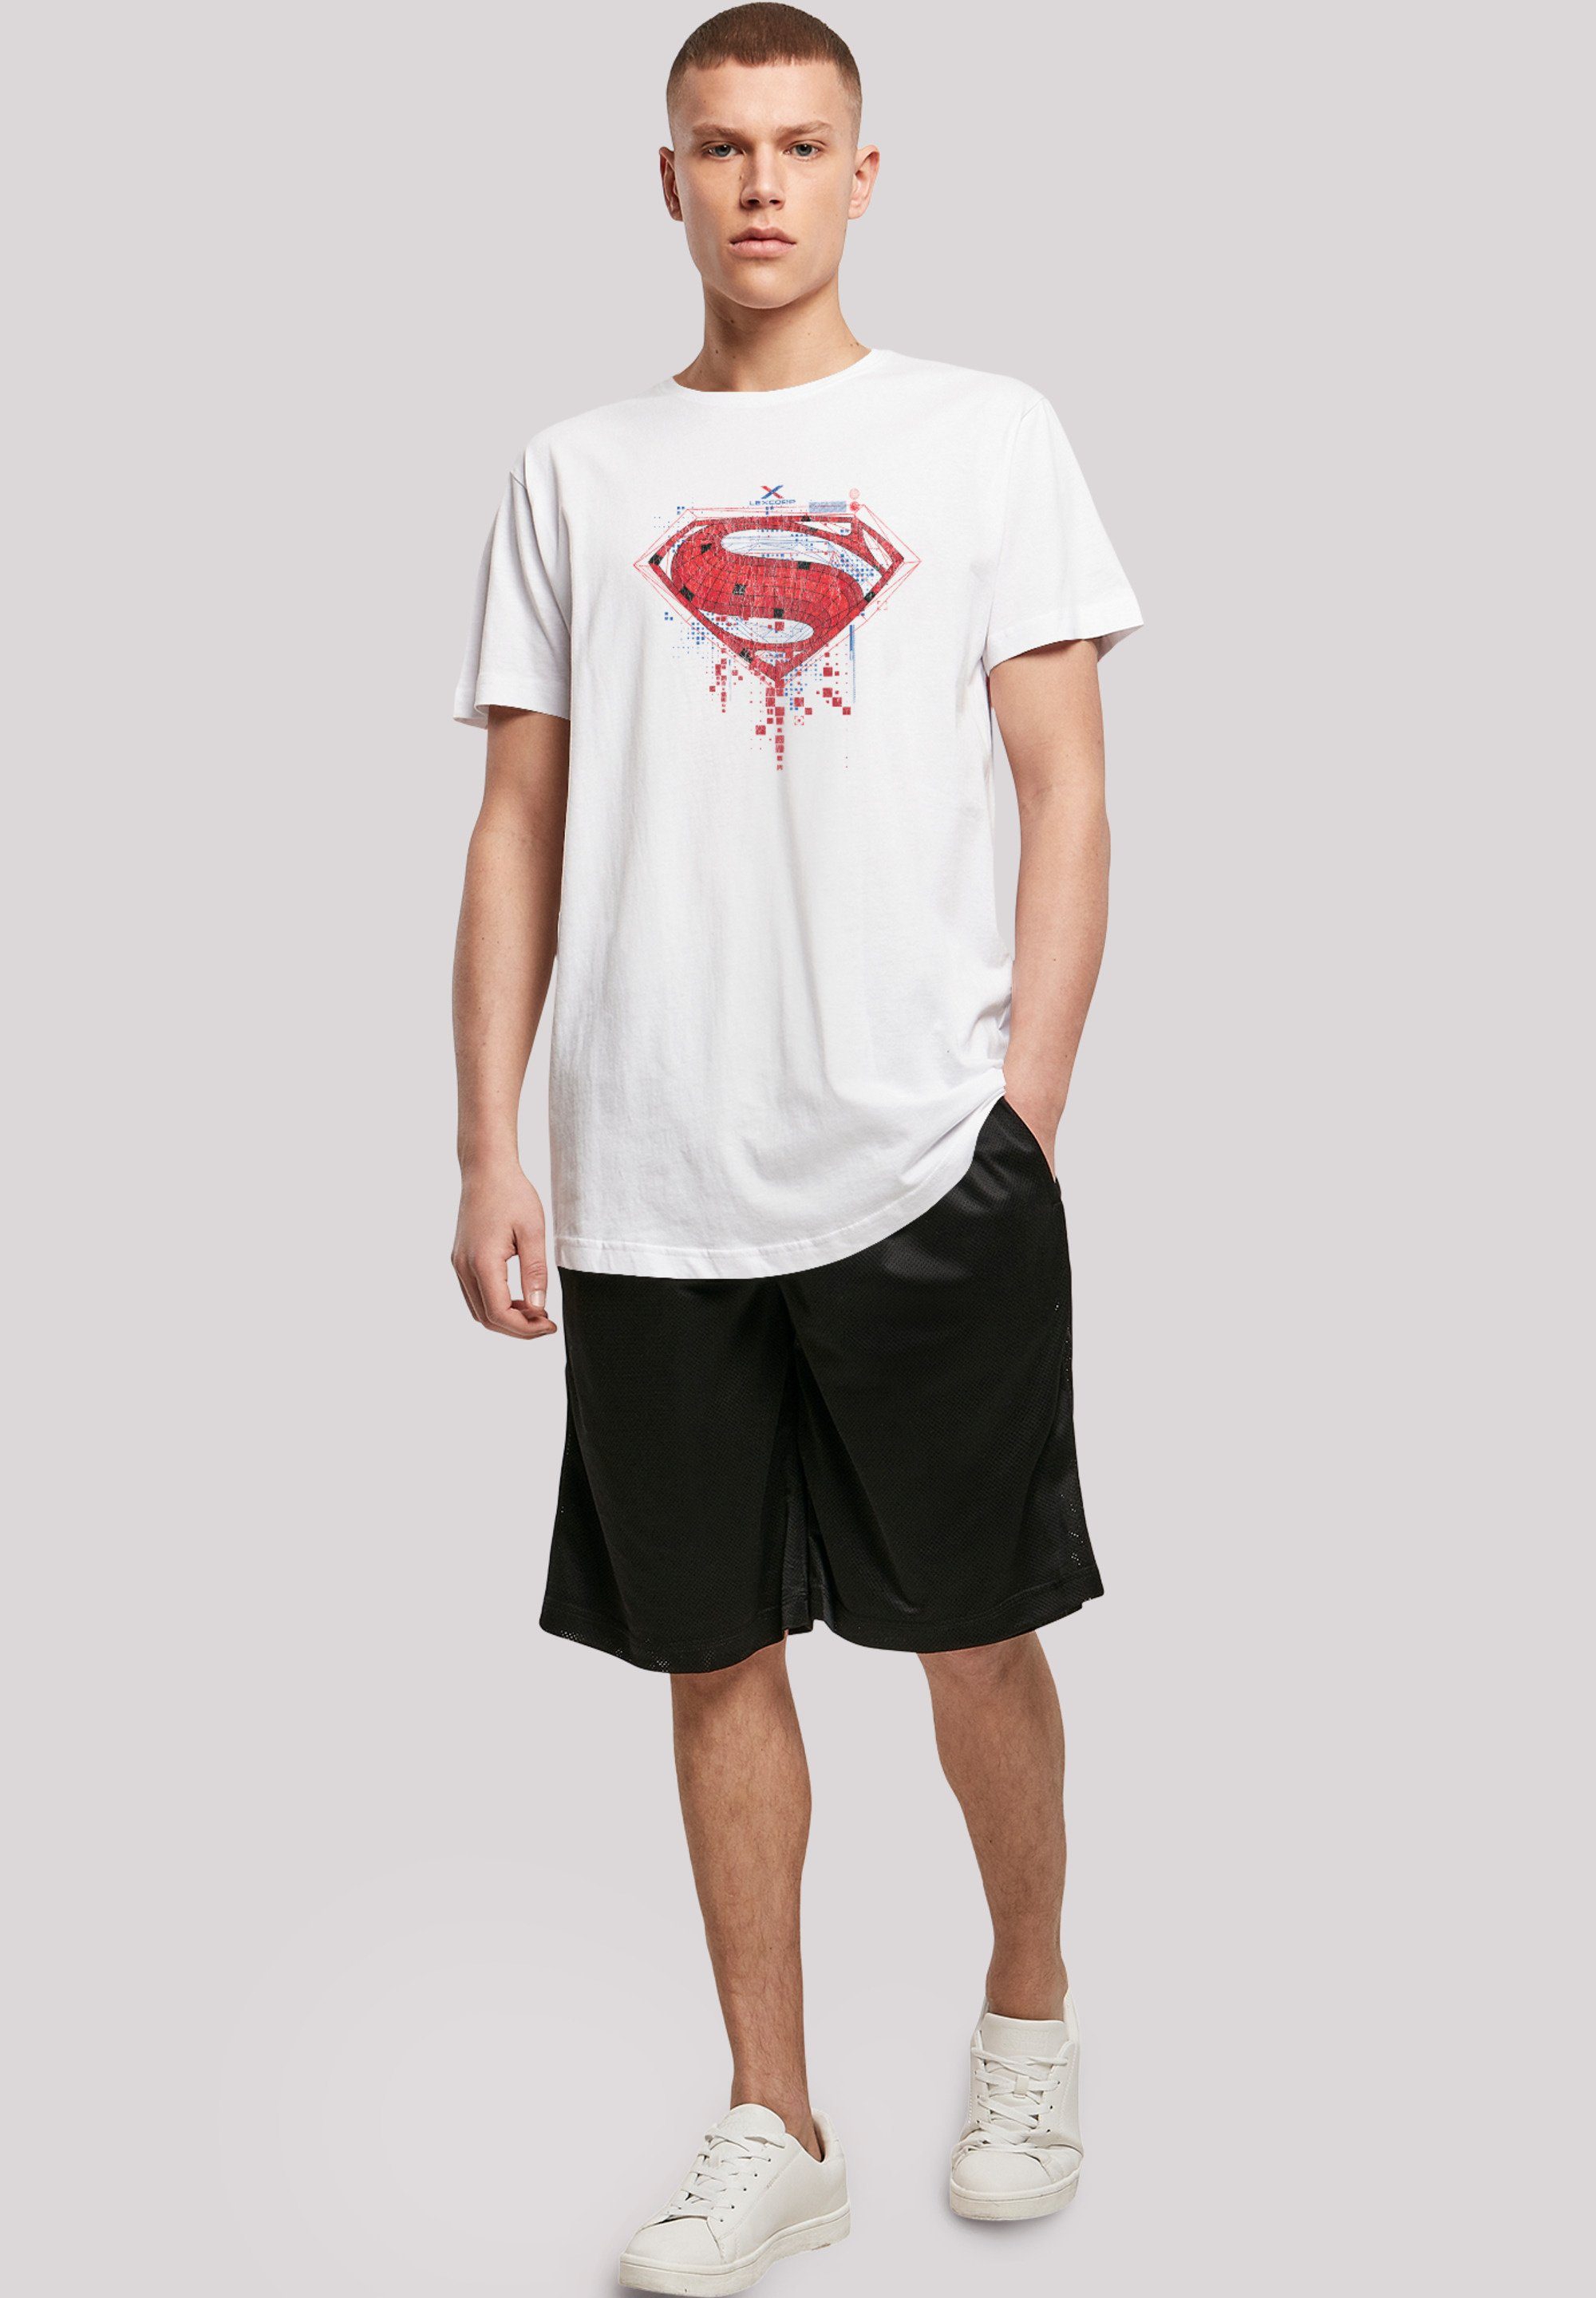 Comis Print F4NT4STIC T-Shirt Geo Logo Superhelden DC Superman